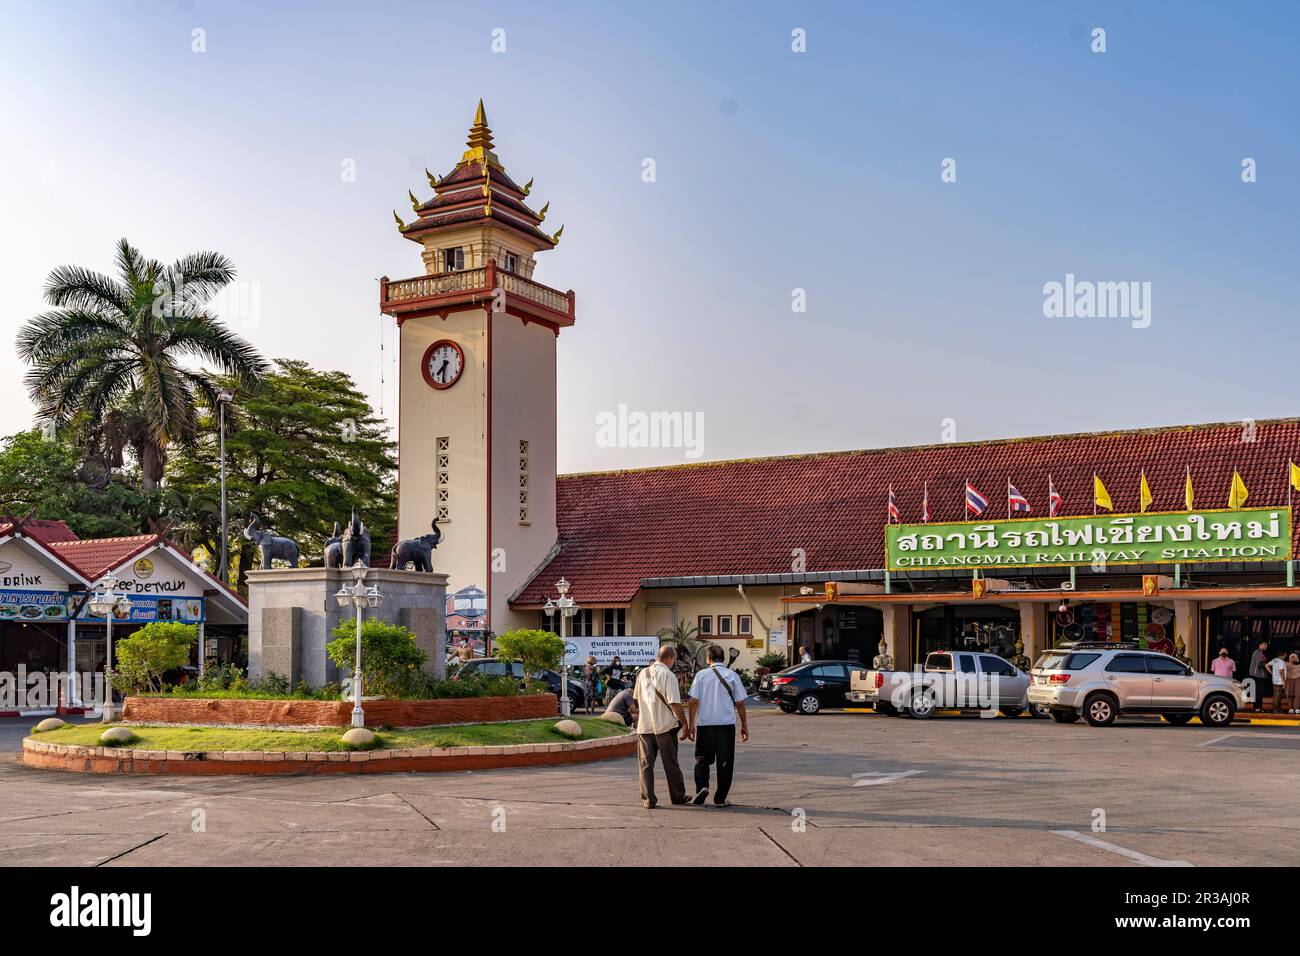 Bahnhof  Chiang Mai Railway Station, Thailand, Asien   |   Chiang Mai Railway Station, Thailand, Asia Stock Photo